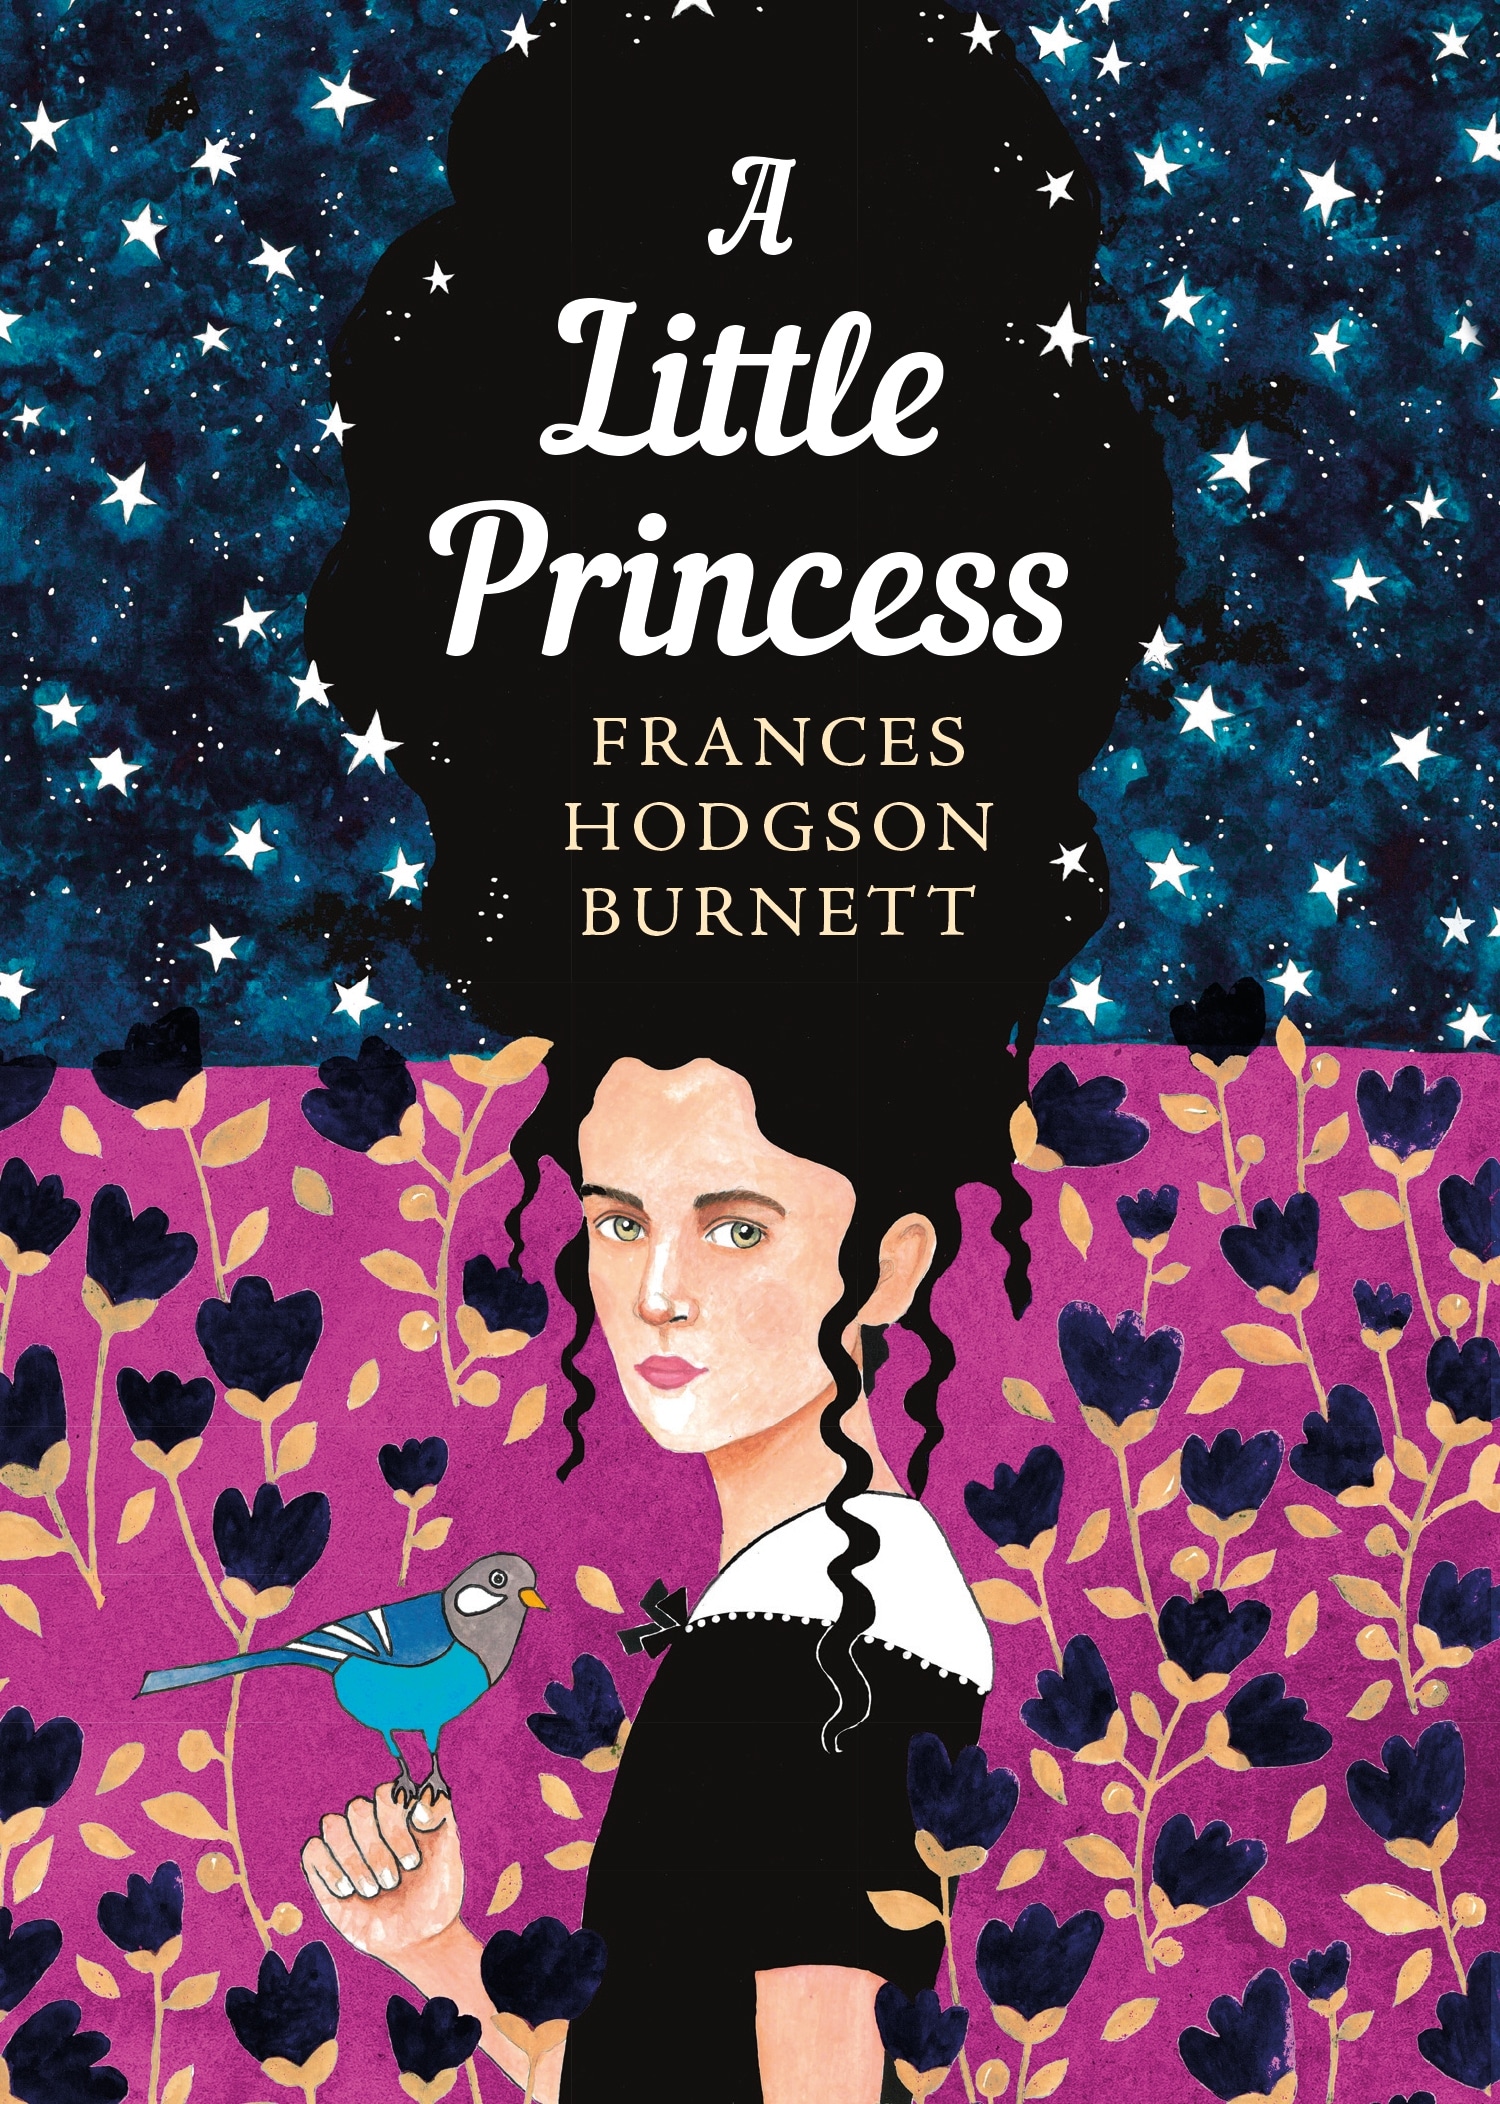 Book “A Little Princess” by Frances Hodgson Burnett — March 7, 2019